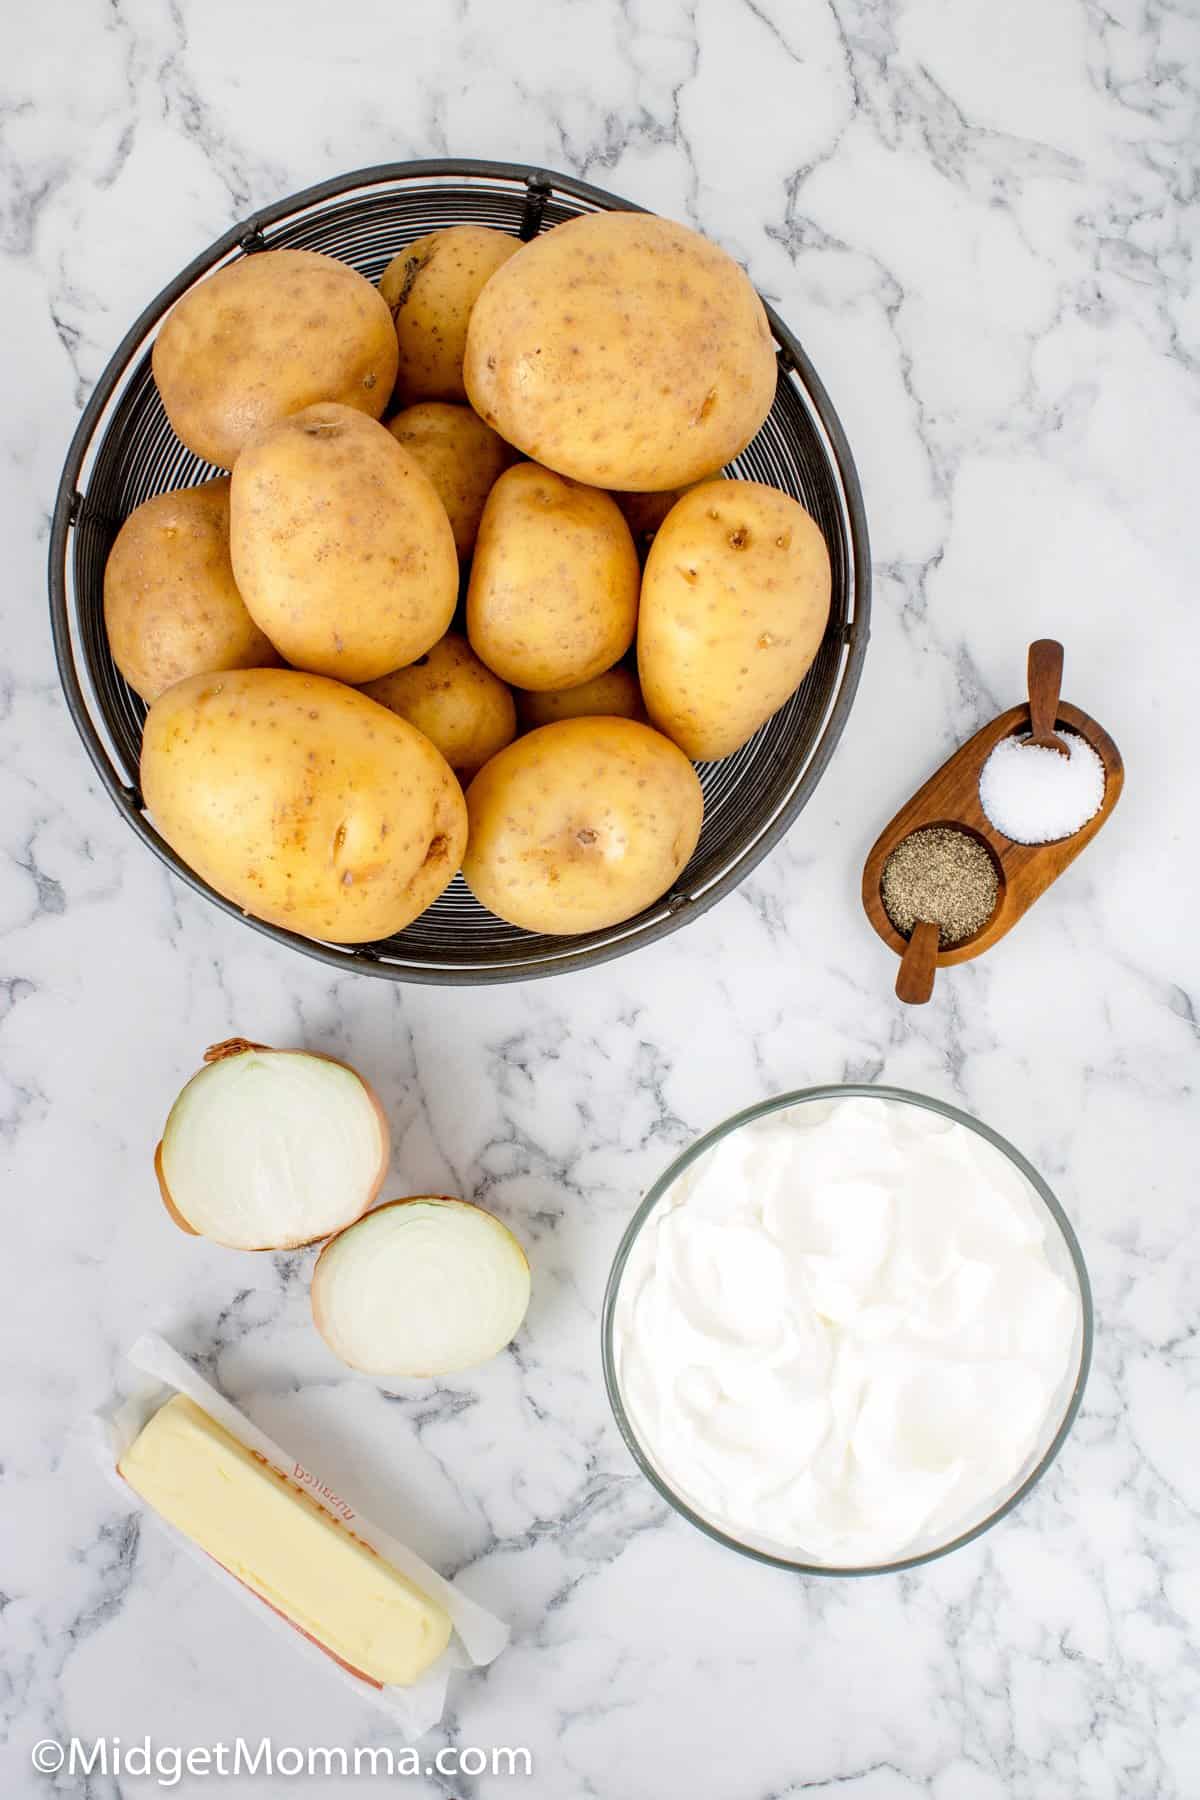 Homemade Mashed potatoes ingredients